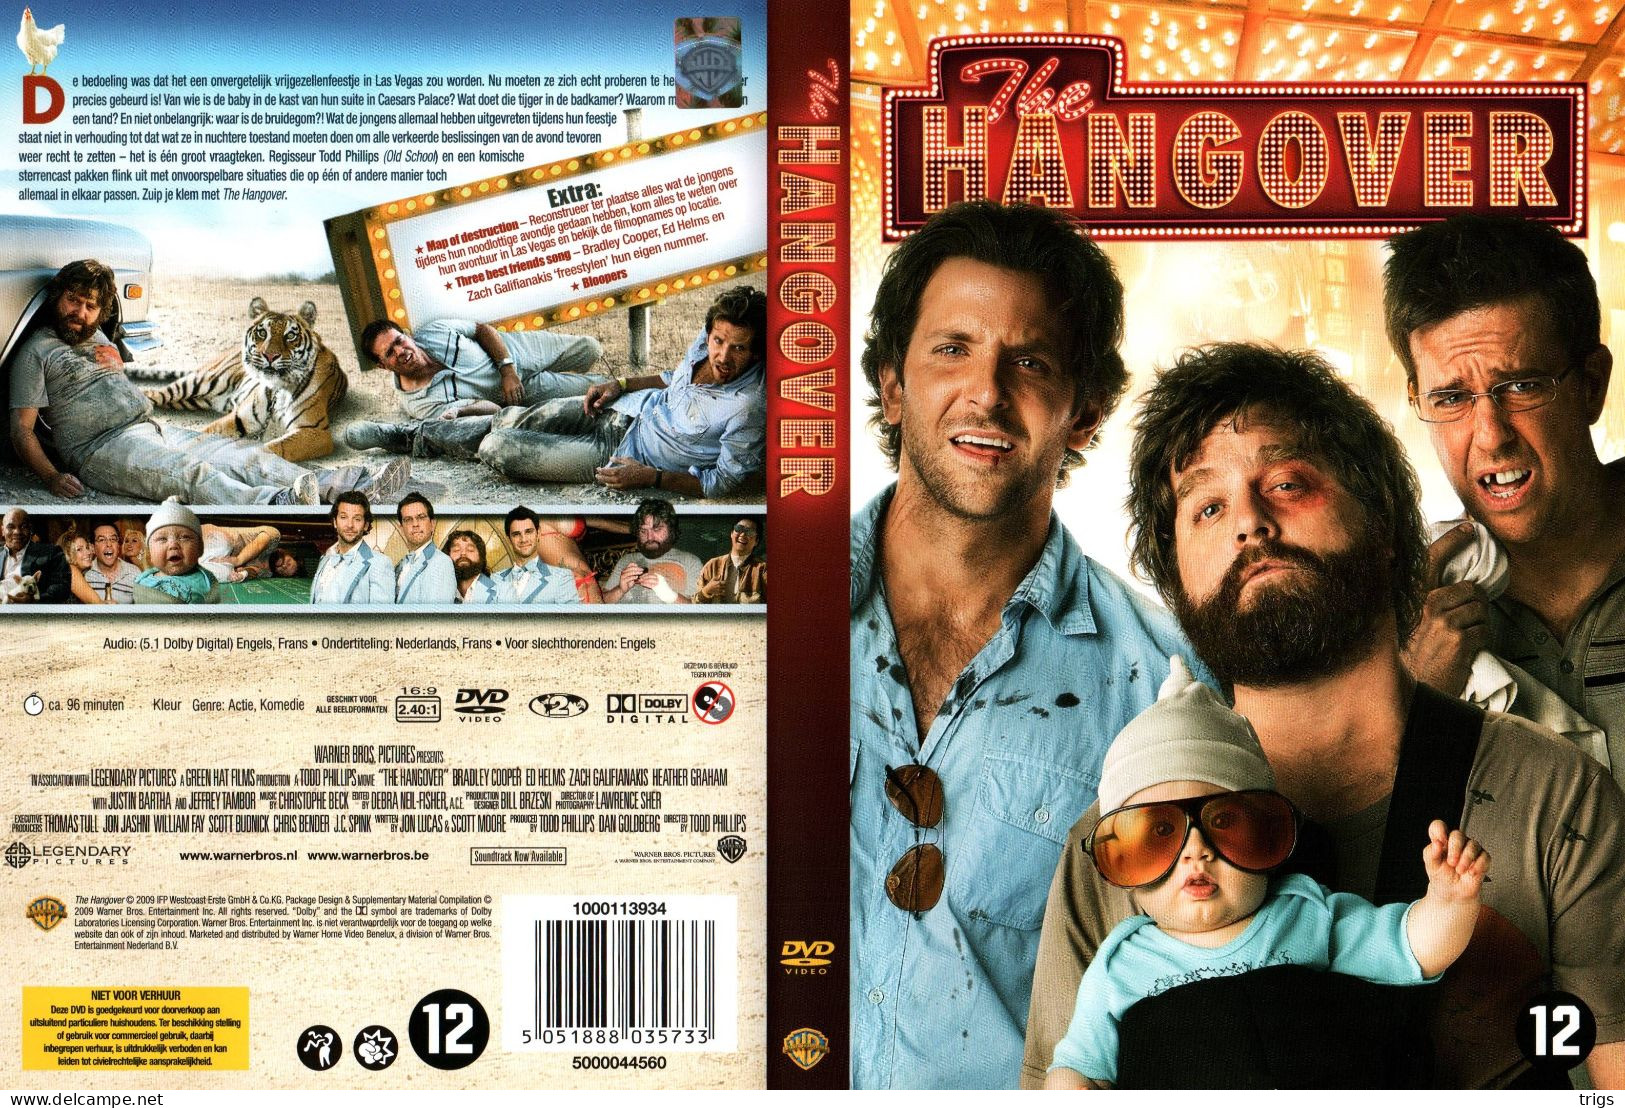 DVD - The Hangover - Komedie